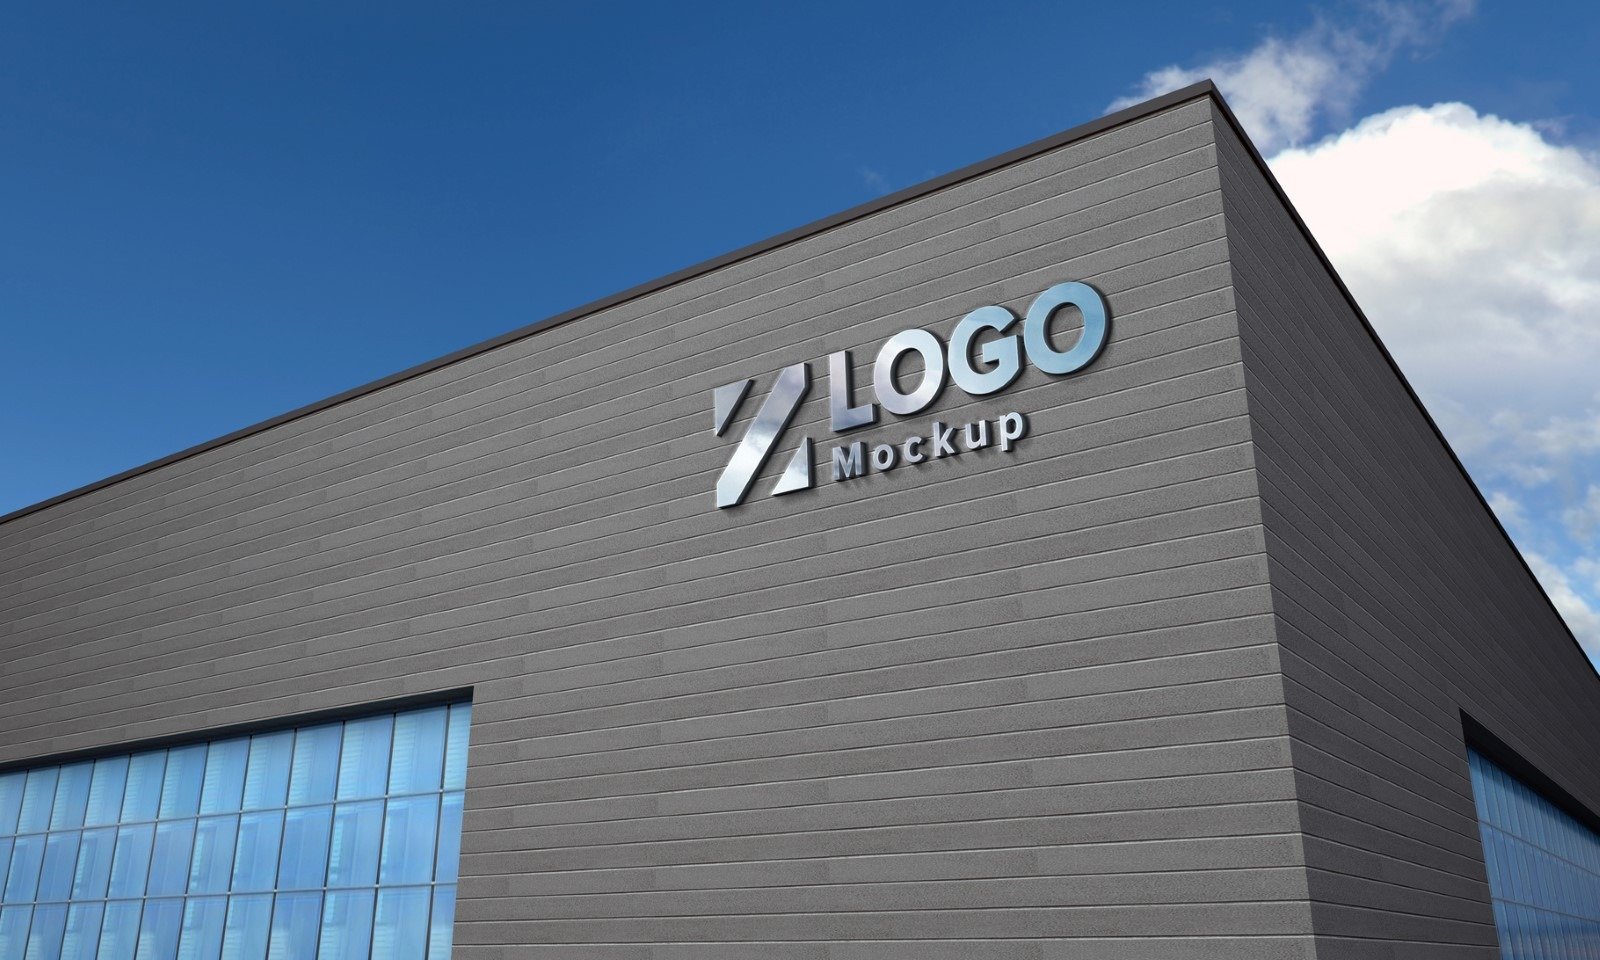 Download Logo Mockup 3D Sign façade Gray Building Product Mockup ...